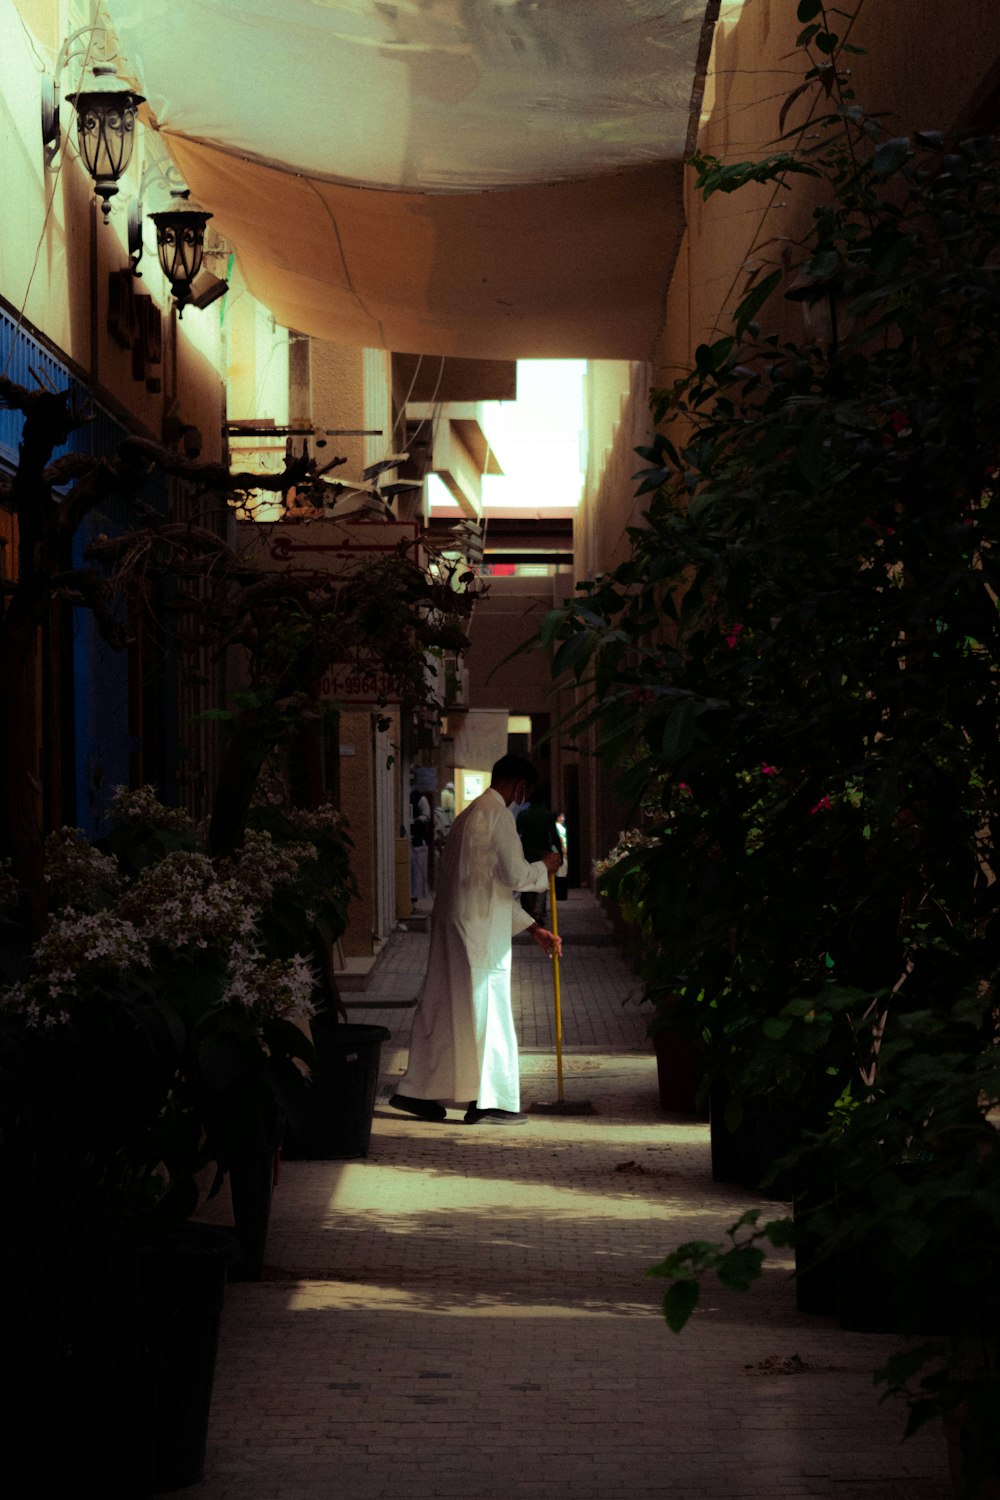 a person in a white robe walking down a sidewalk